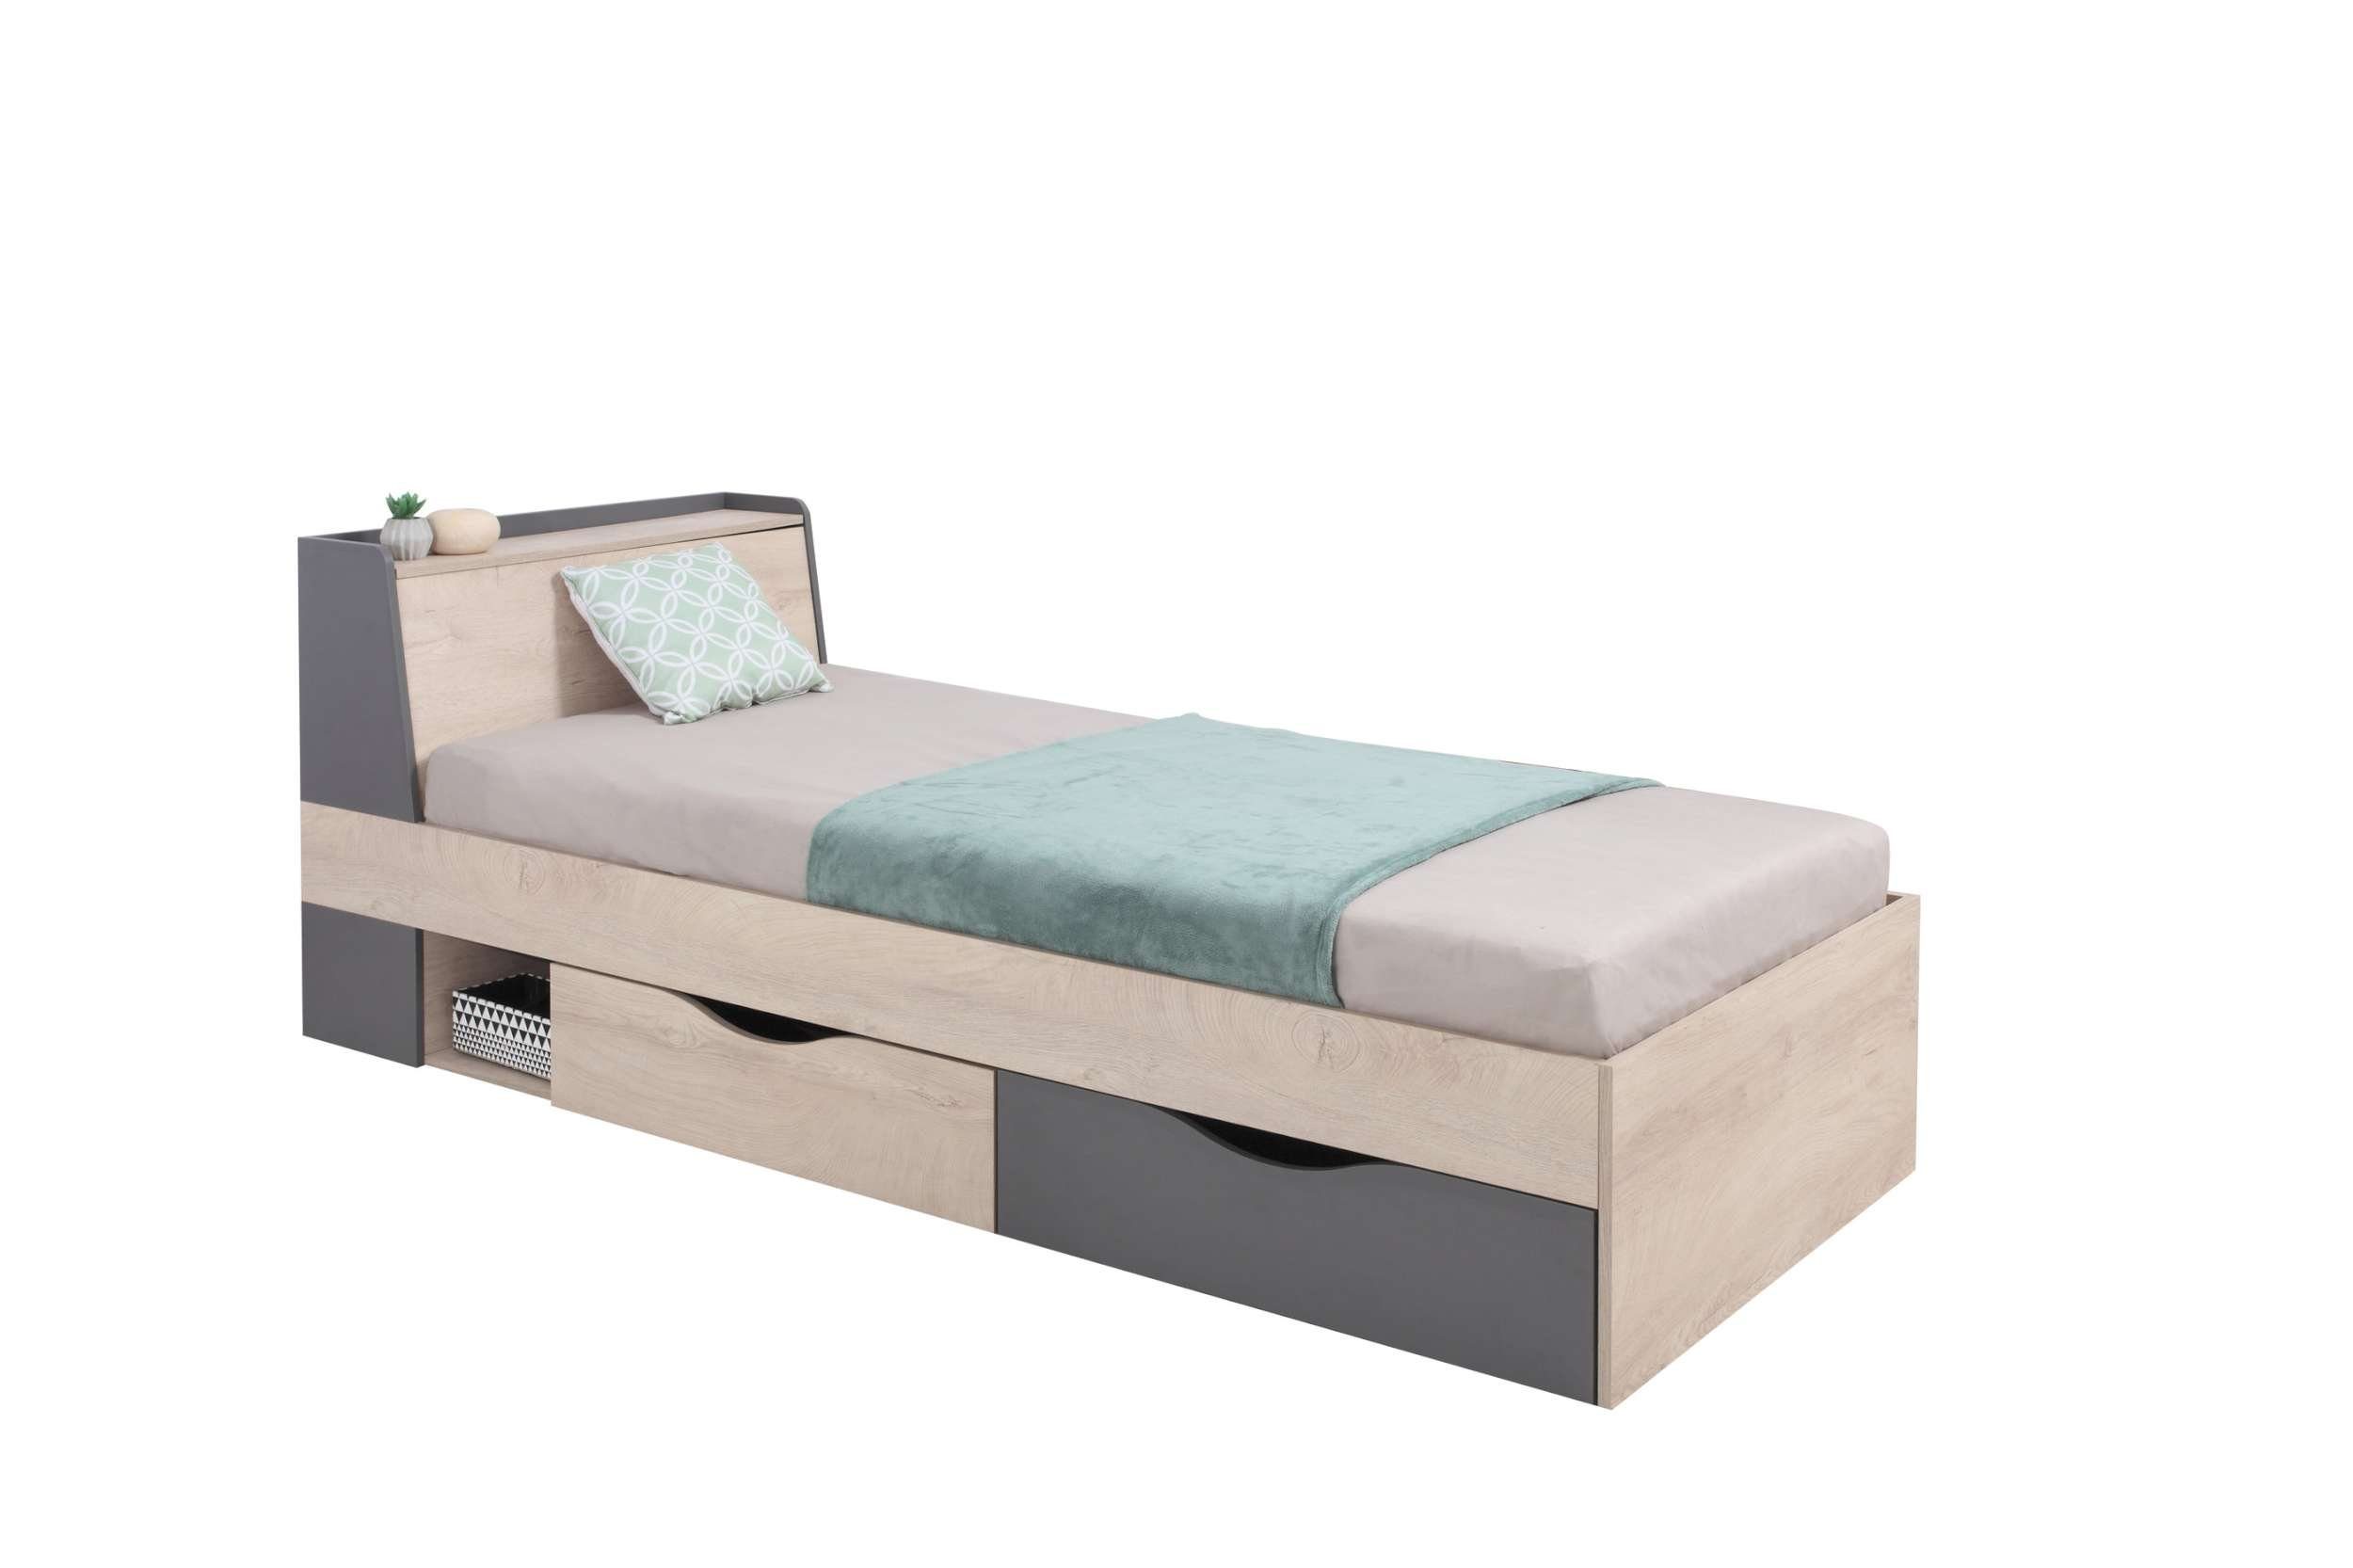 Stylefy Kinderbett Japan (Kinderbett, Bett), 90/120x200 cm, mit Schubladen,  ABS-Schutzkanten, Liegekomfort, Modern Design